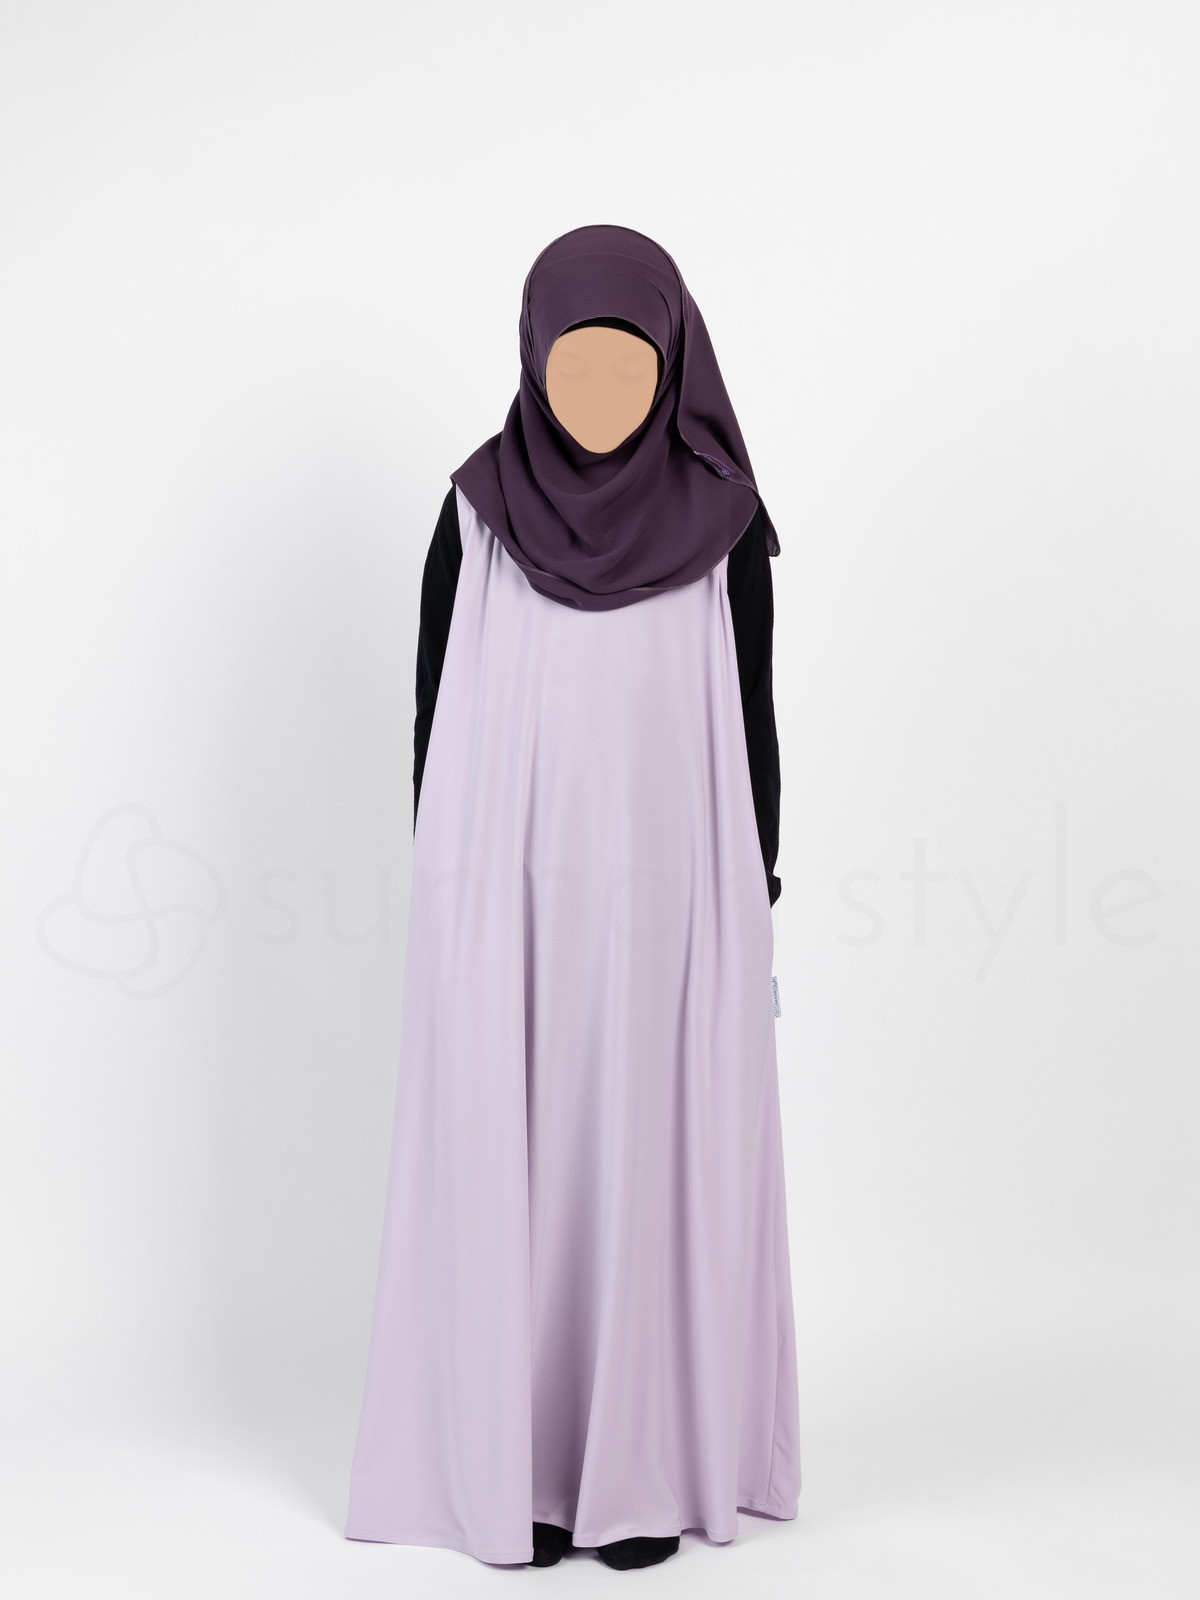 Sunnah Style - Girls Sleeveless Jersey Abaya (Lavender)